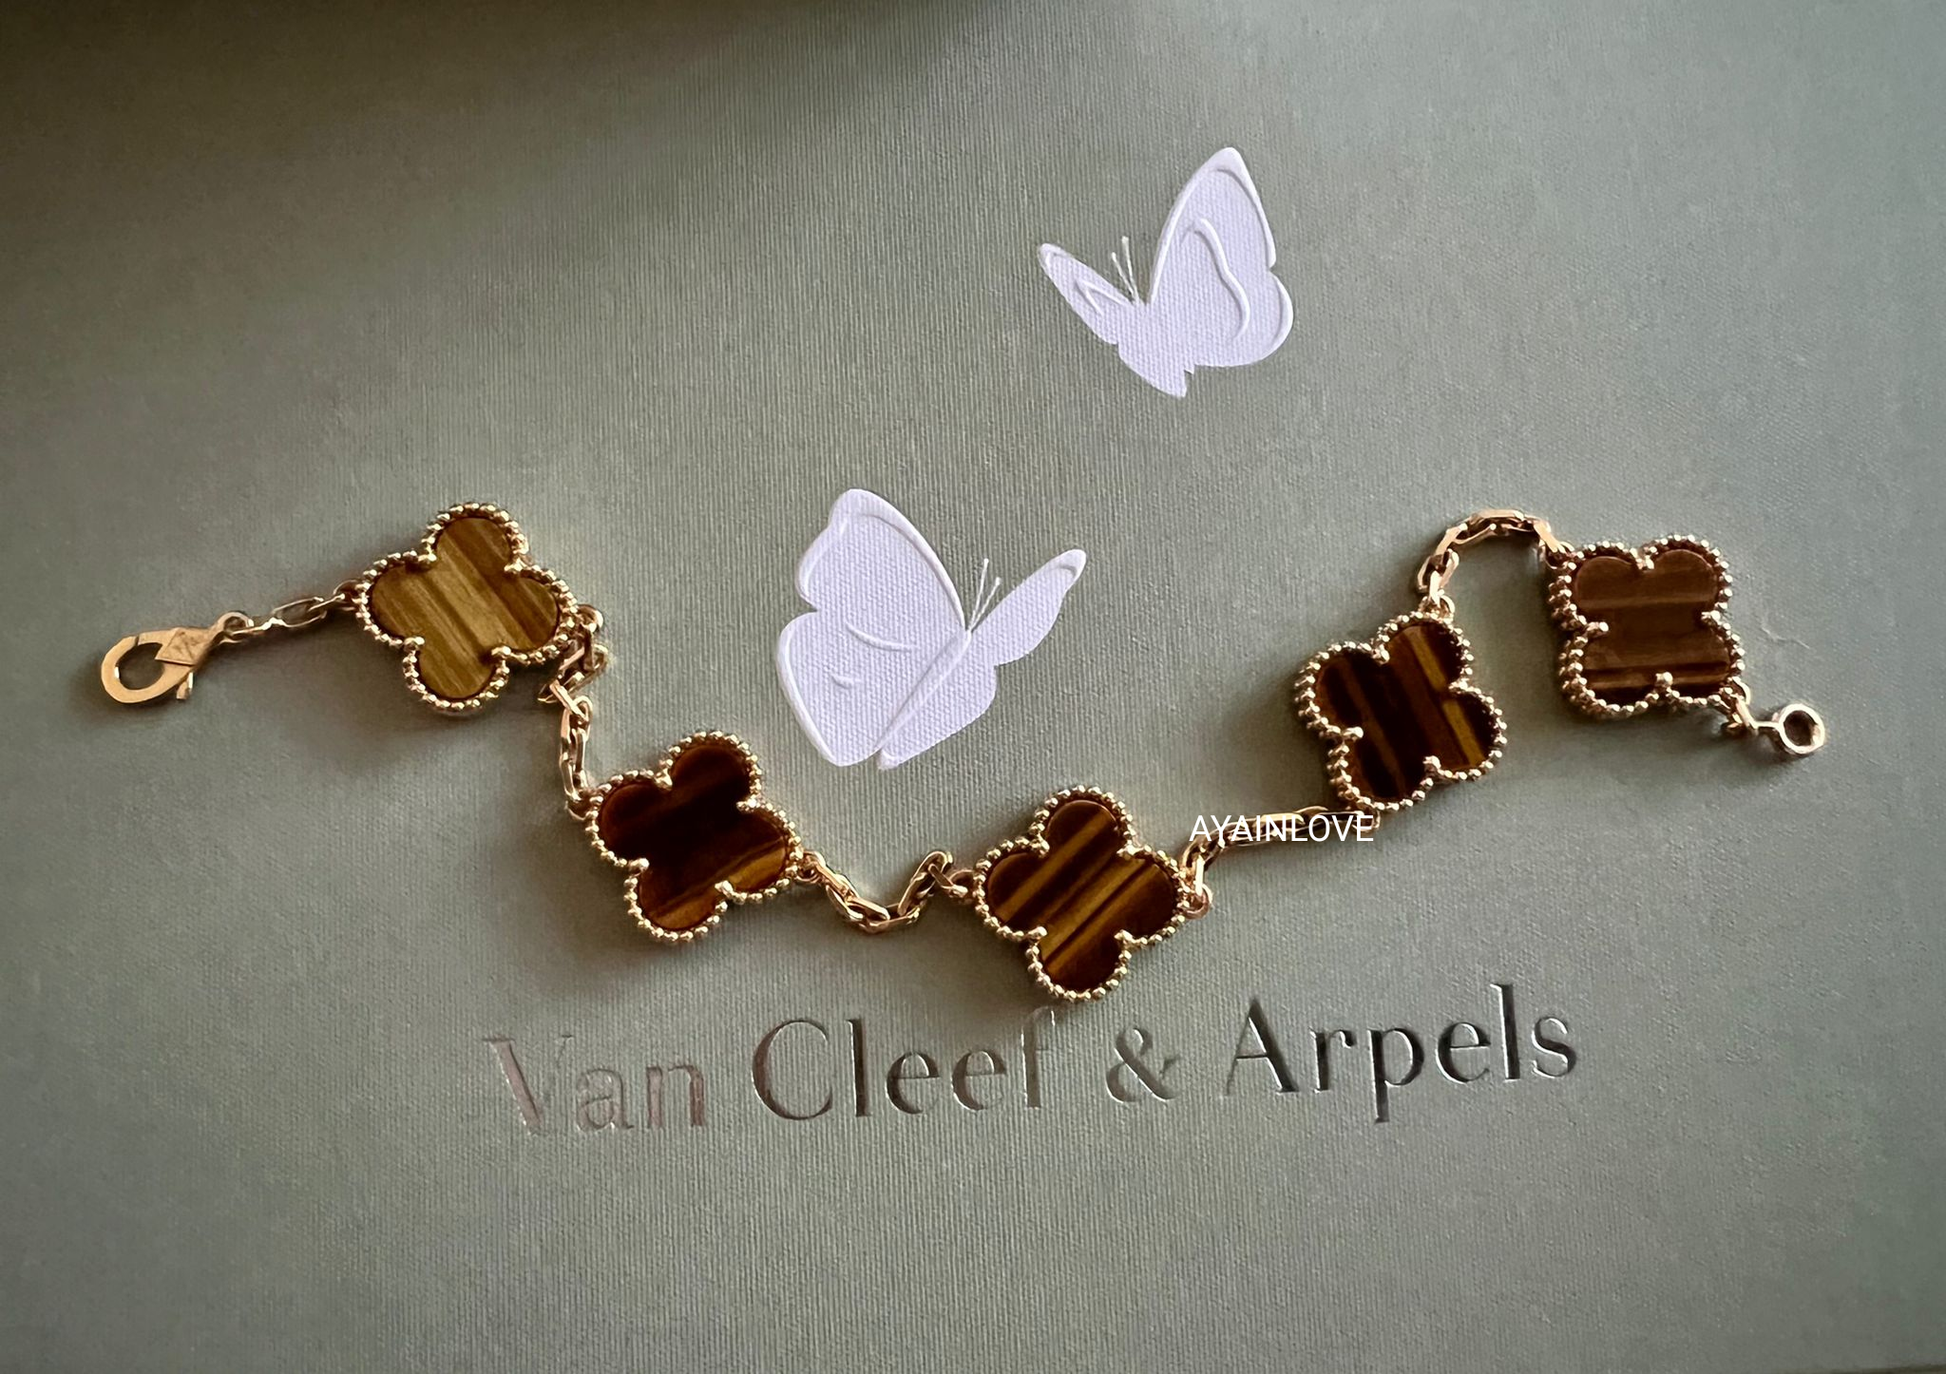 Van Cleef & Arpels Pendant Necklace, Yellow Gold & Tiger's Eye - Vintage Alhambra